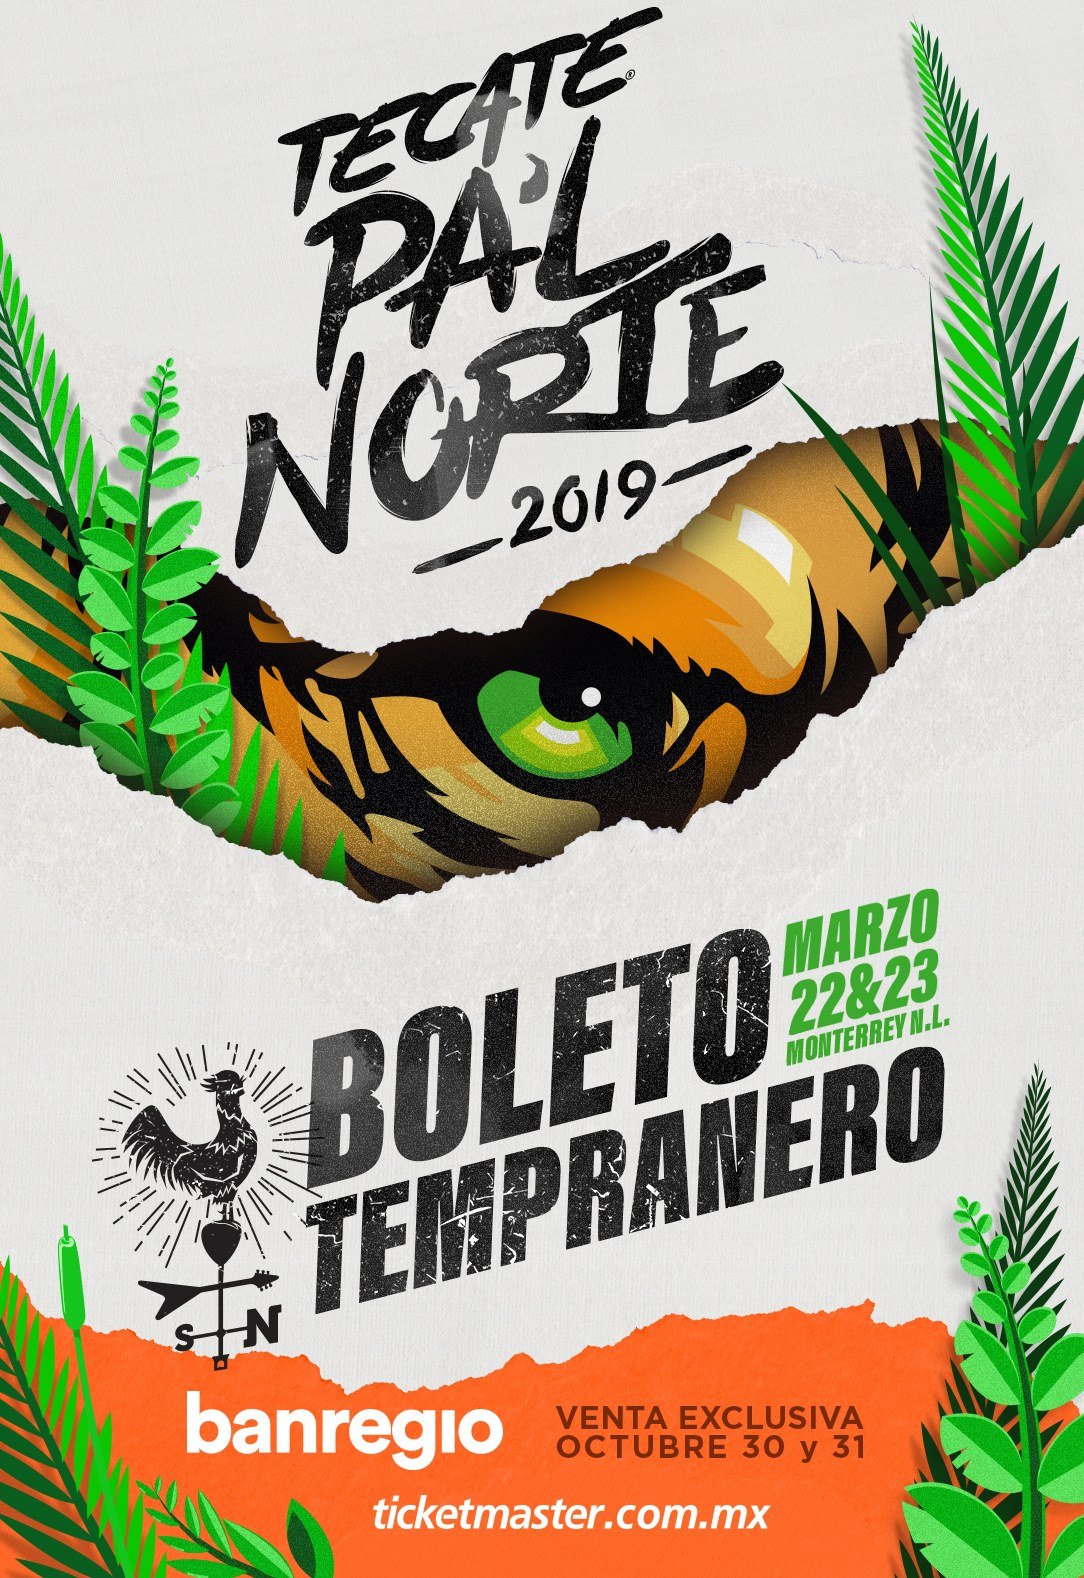 Tecate Pal Norte 2019 Boleto Tempranero